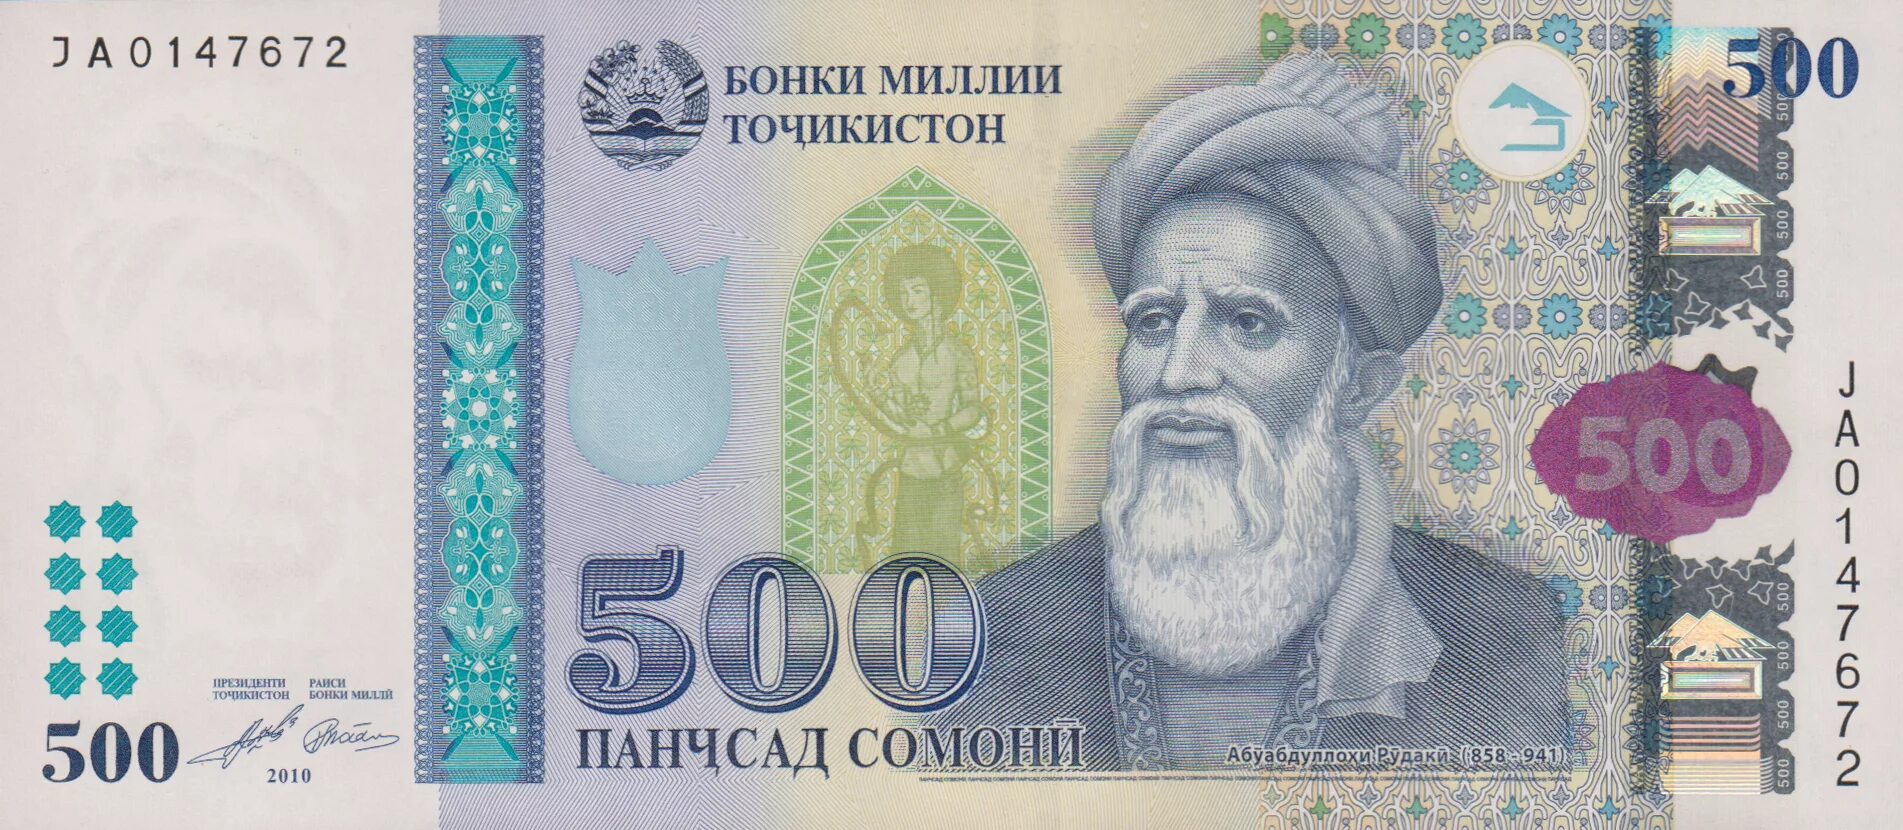 Валюта точикистон. Купюра Таджикистана 500 Сомони. Деньги Таджикистана 500 Сомони. Купюры Сомони 500 Сомони. Пули точики 500 сомона.